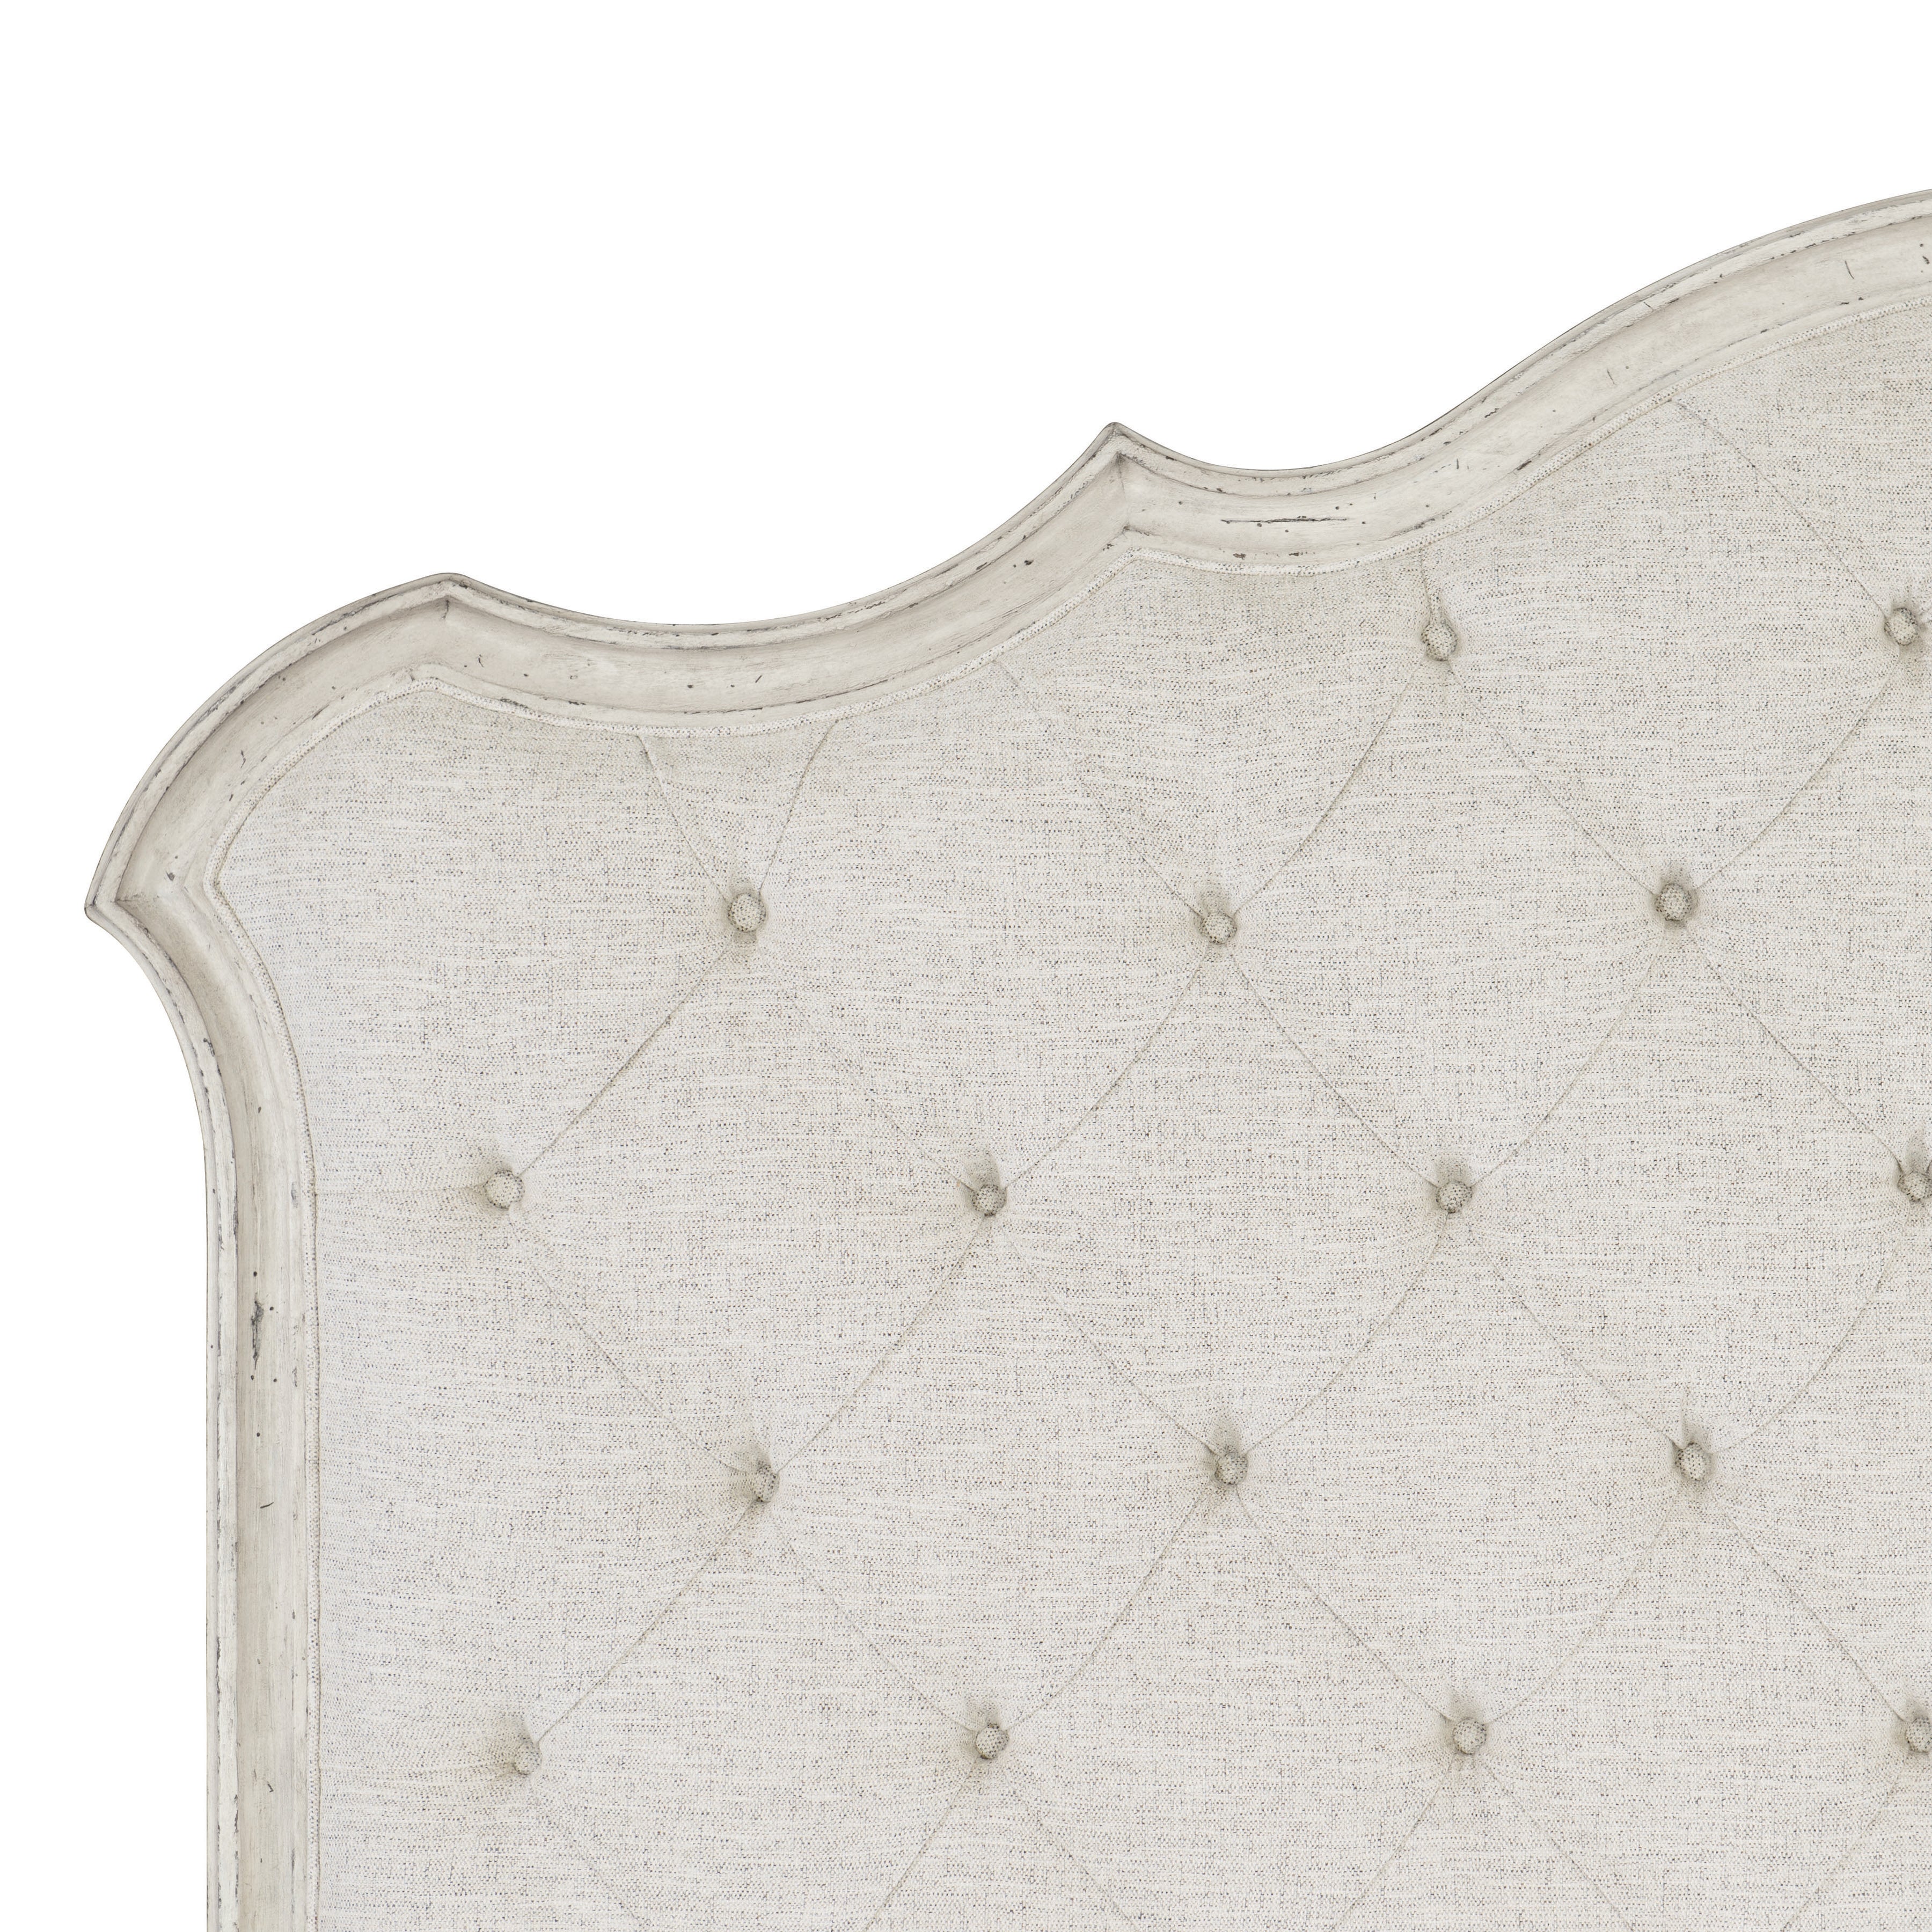 Mirabelle Upholstered Queen Panel Bed